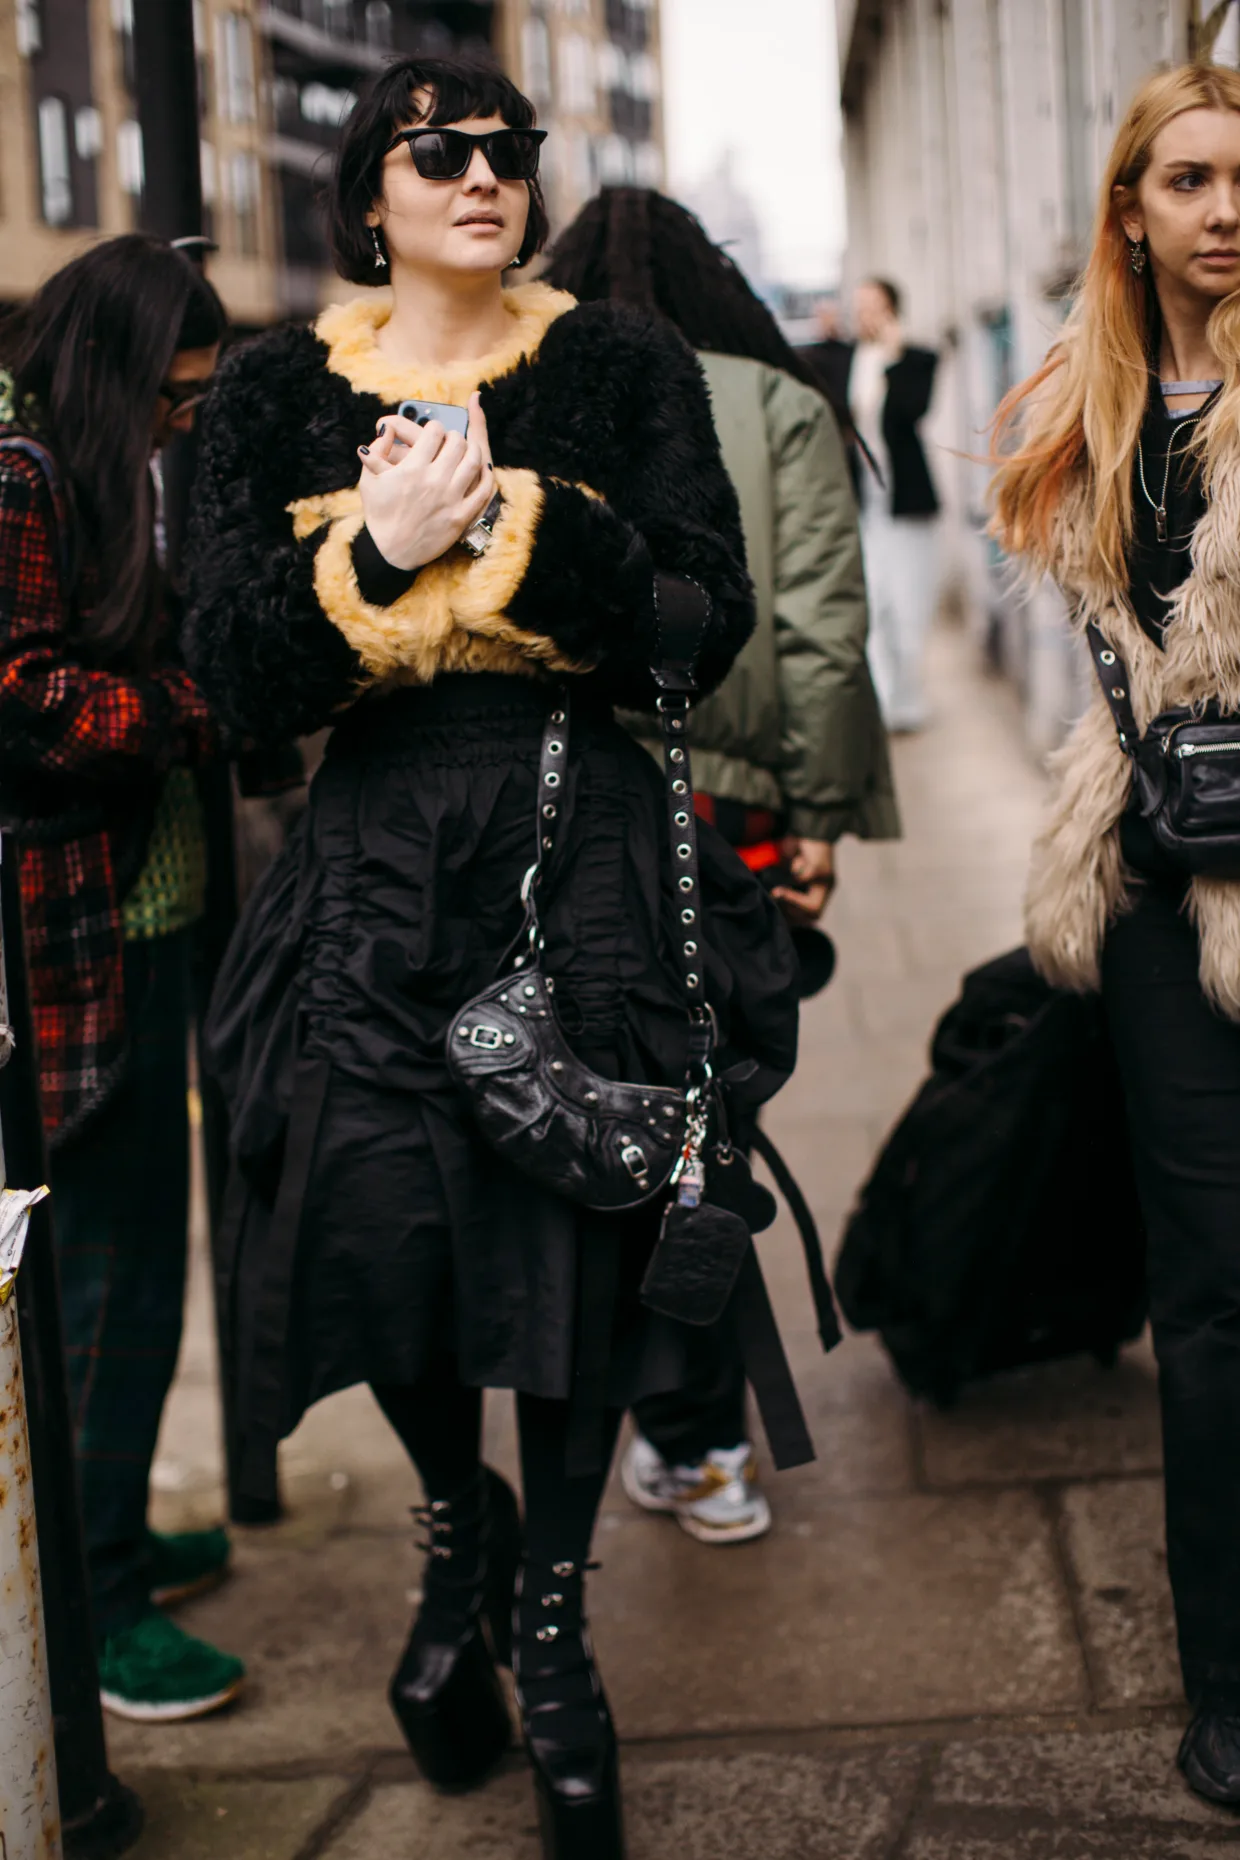 London Fashion Week street style 2023: the best photos so far